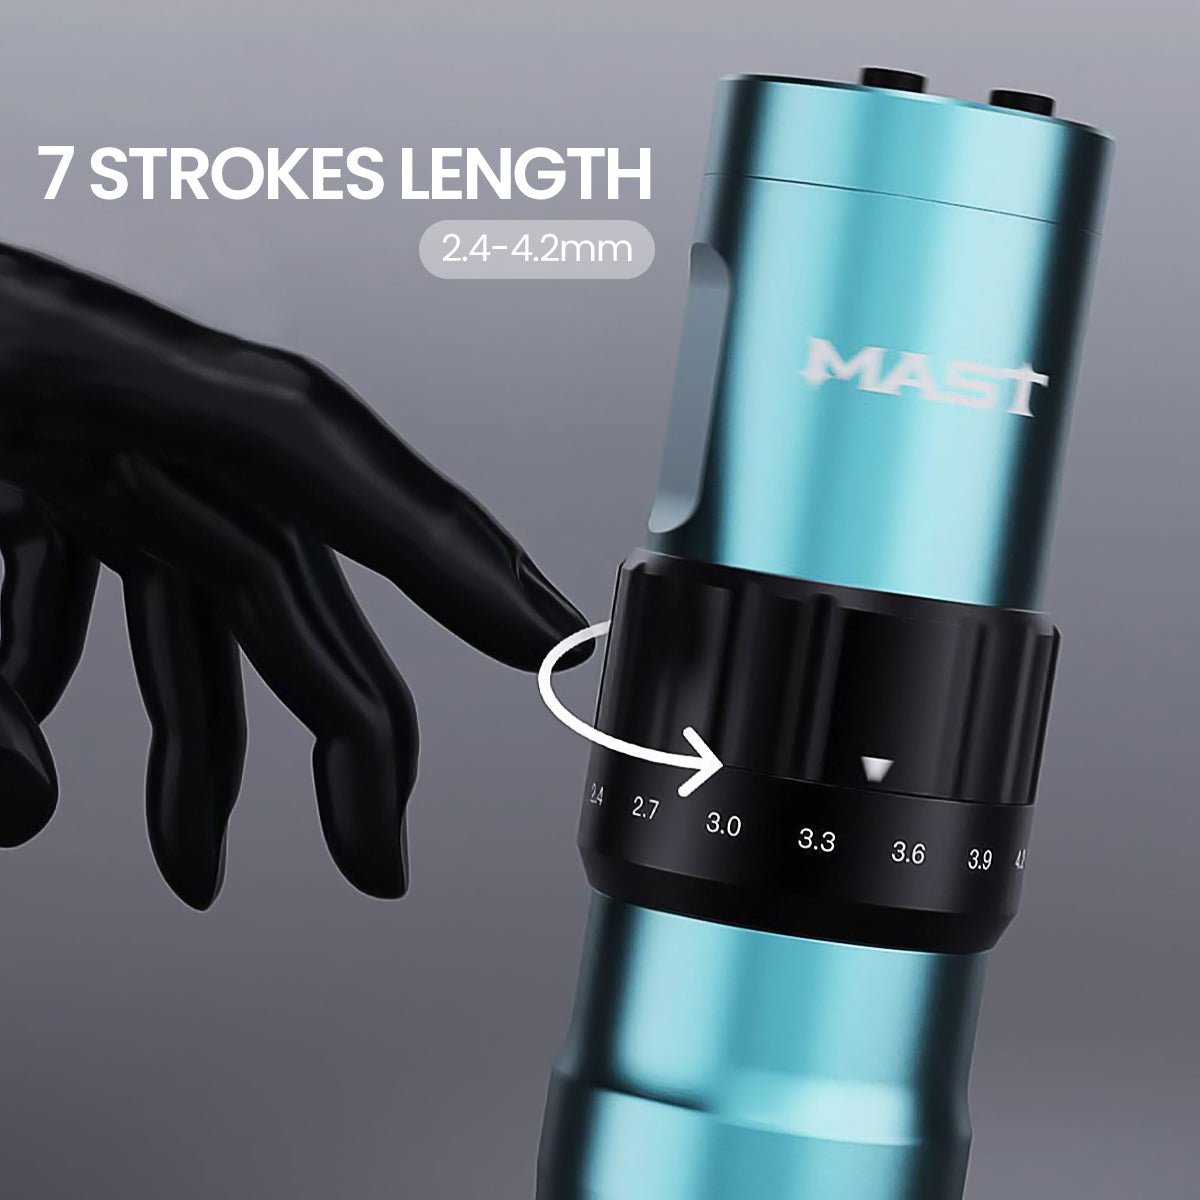 Mast Fold2 Wireless Tattoo Pen Machine - One Battery (2.4mm to 4.2mm Stroke)